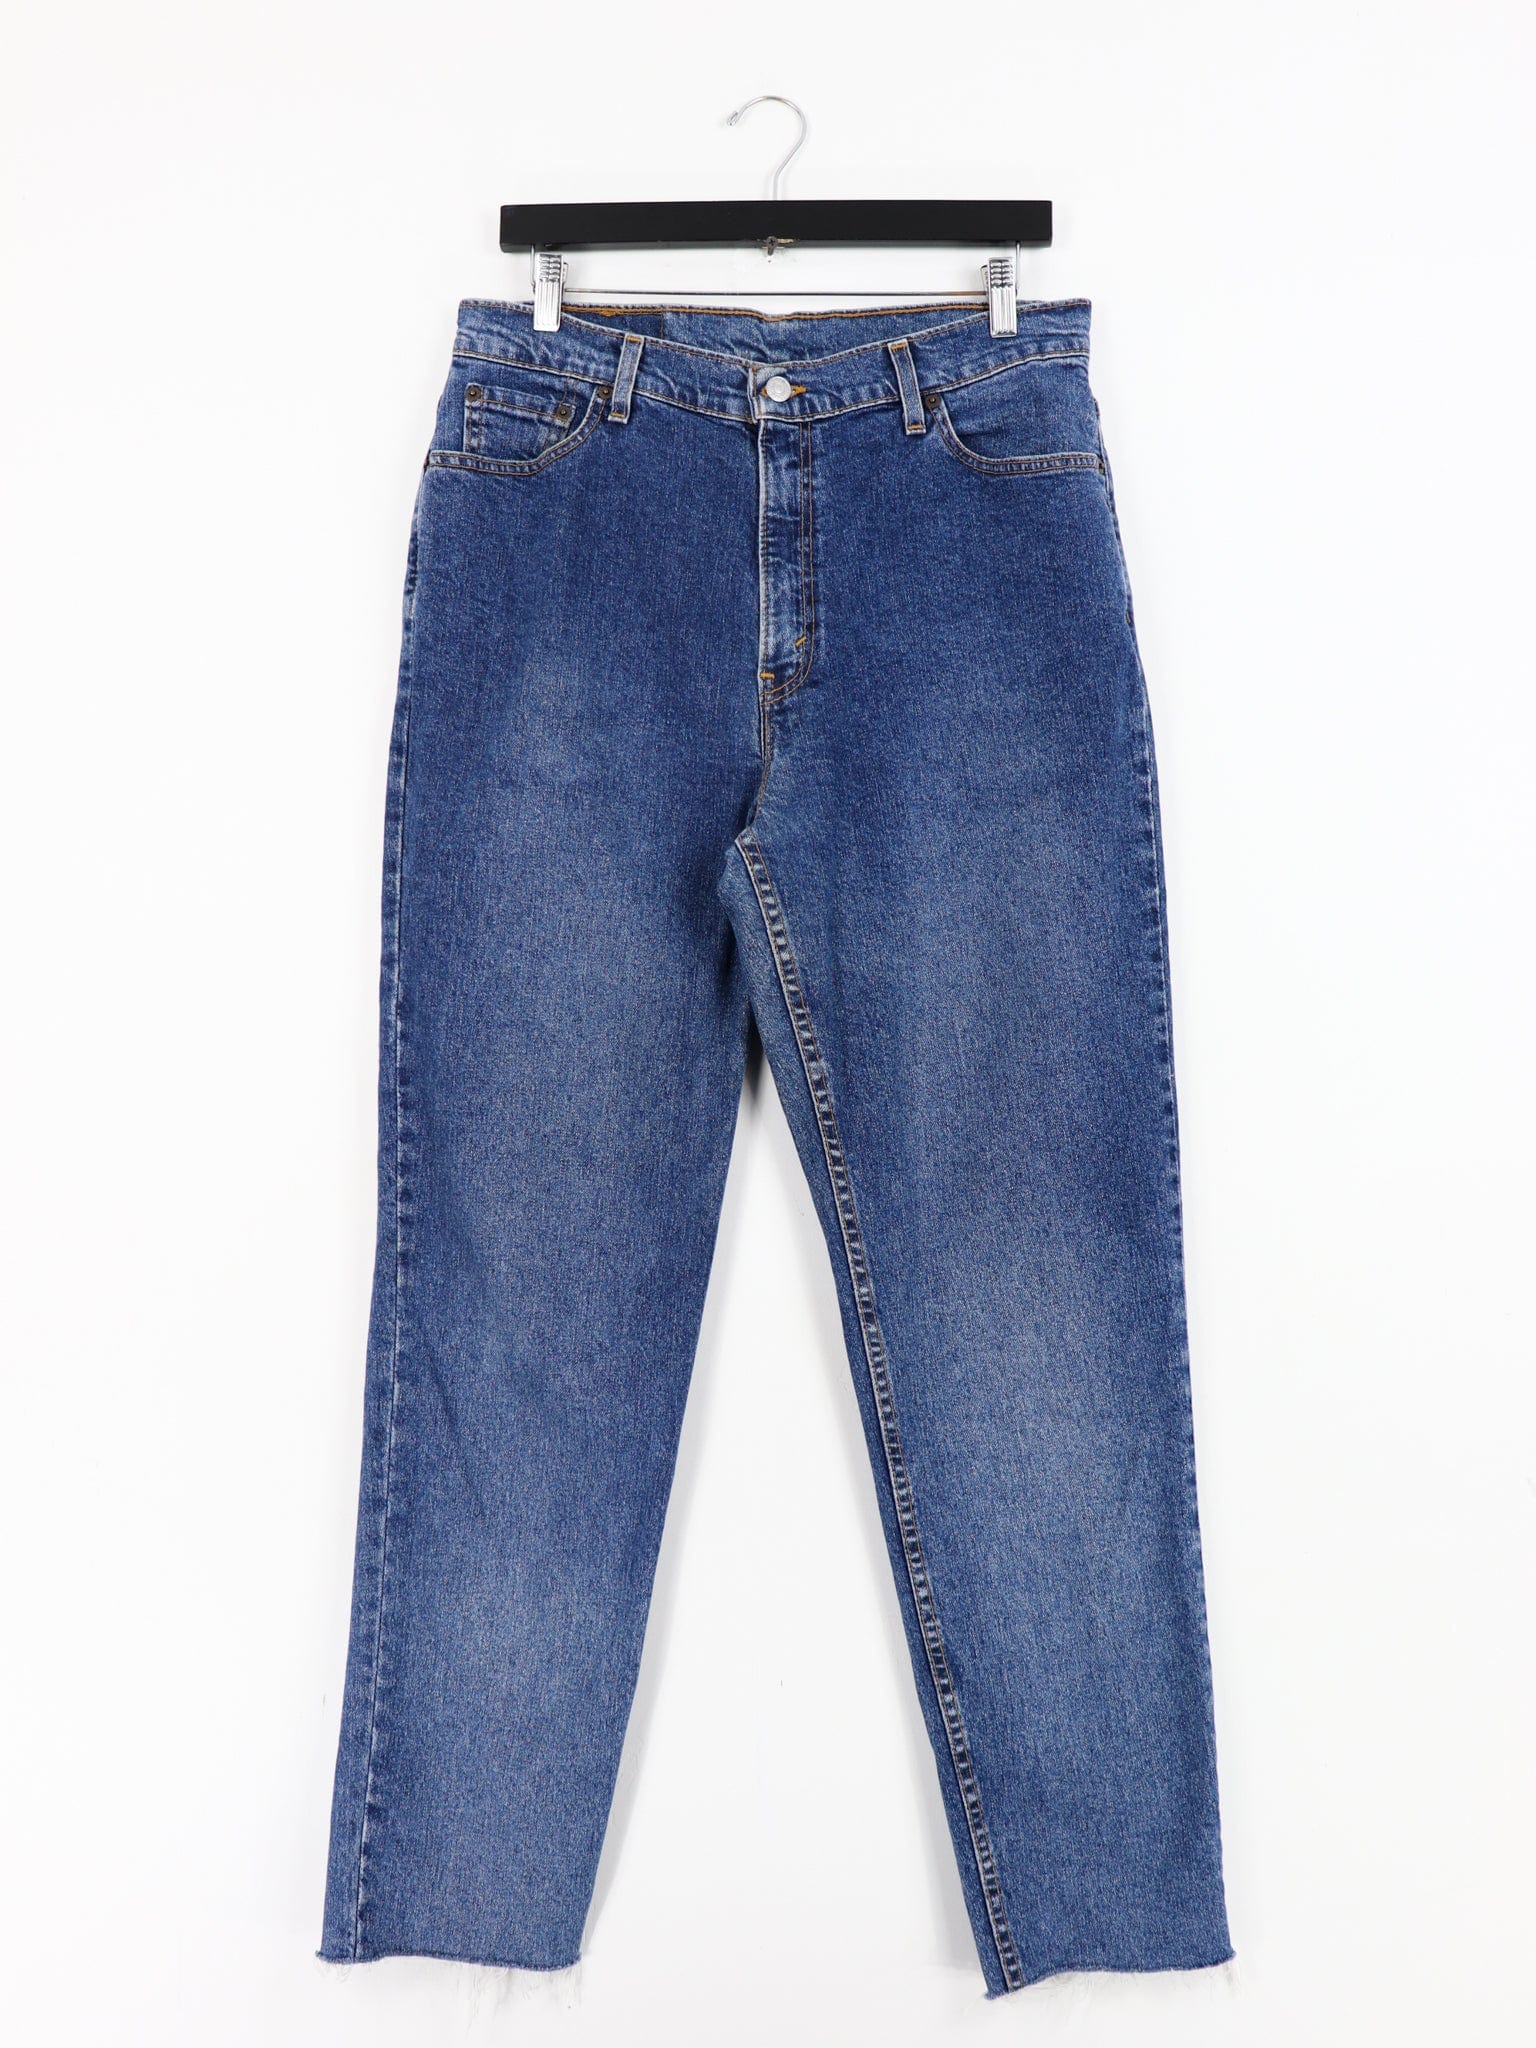 Vintage Levi's 512 Slim Tapered Fit Denim Jeans Women's Size 14M(34 x